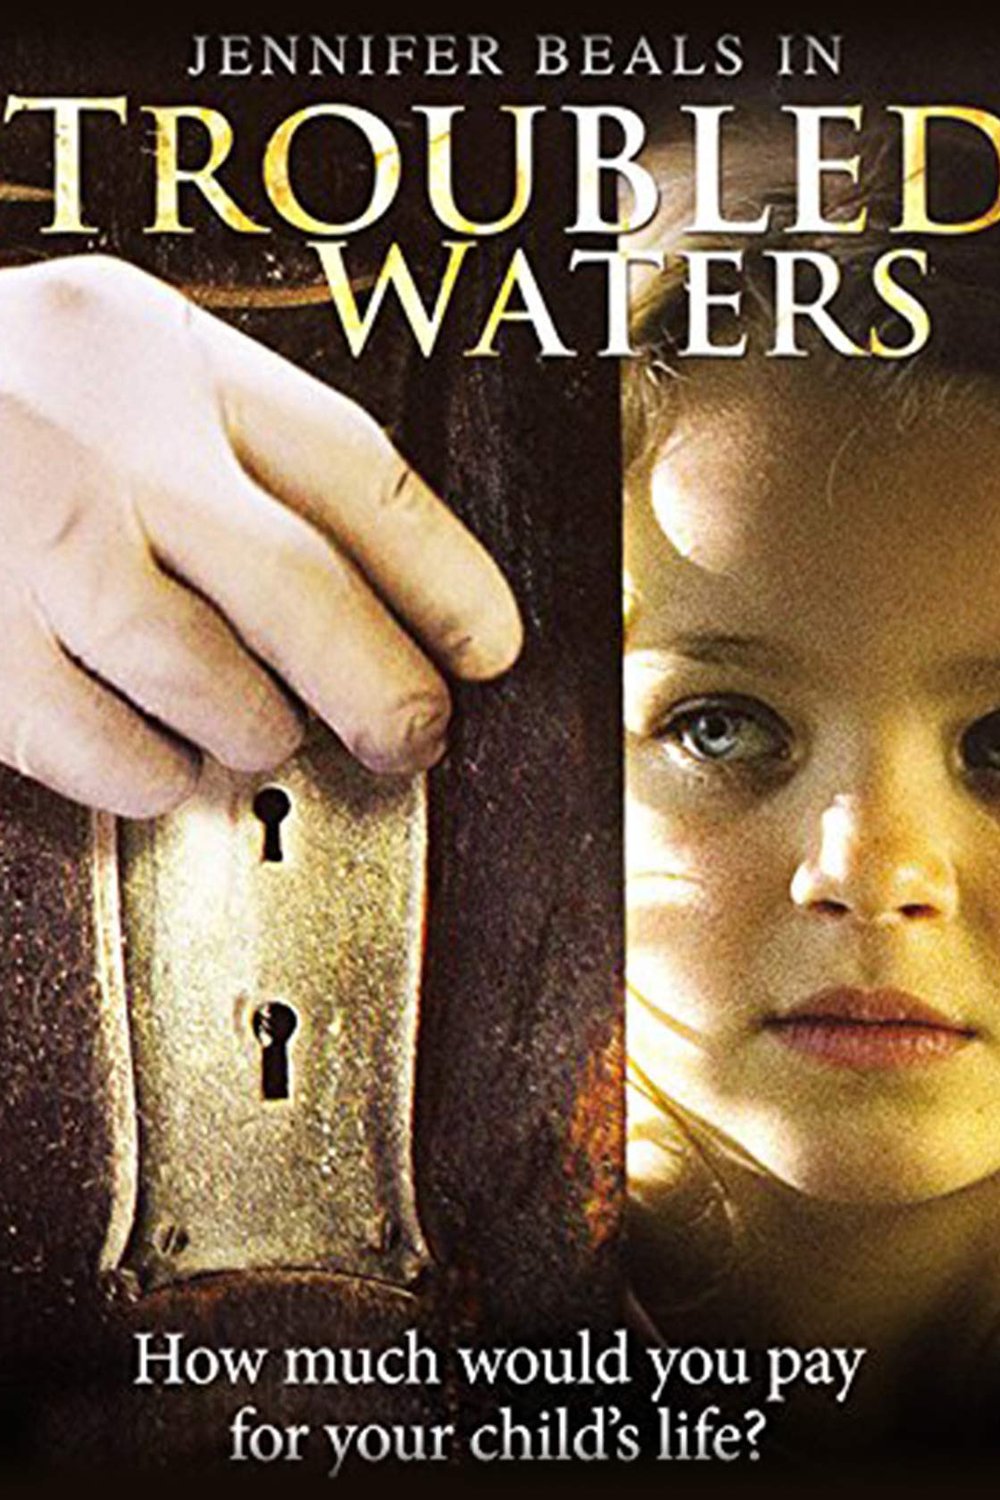 L'affiche du film Troubled Waters